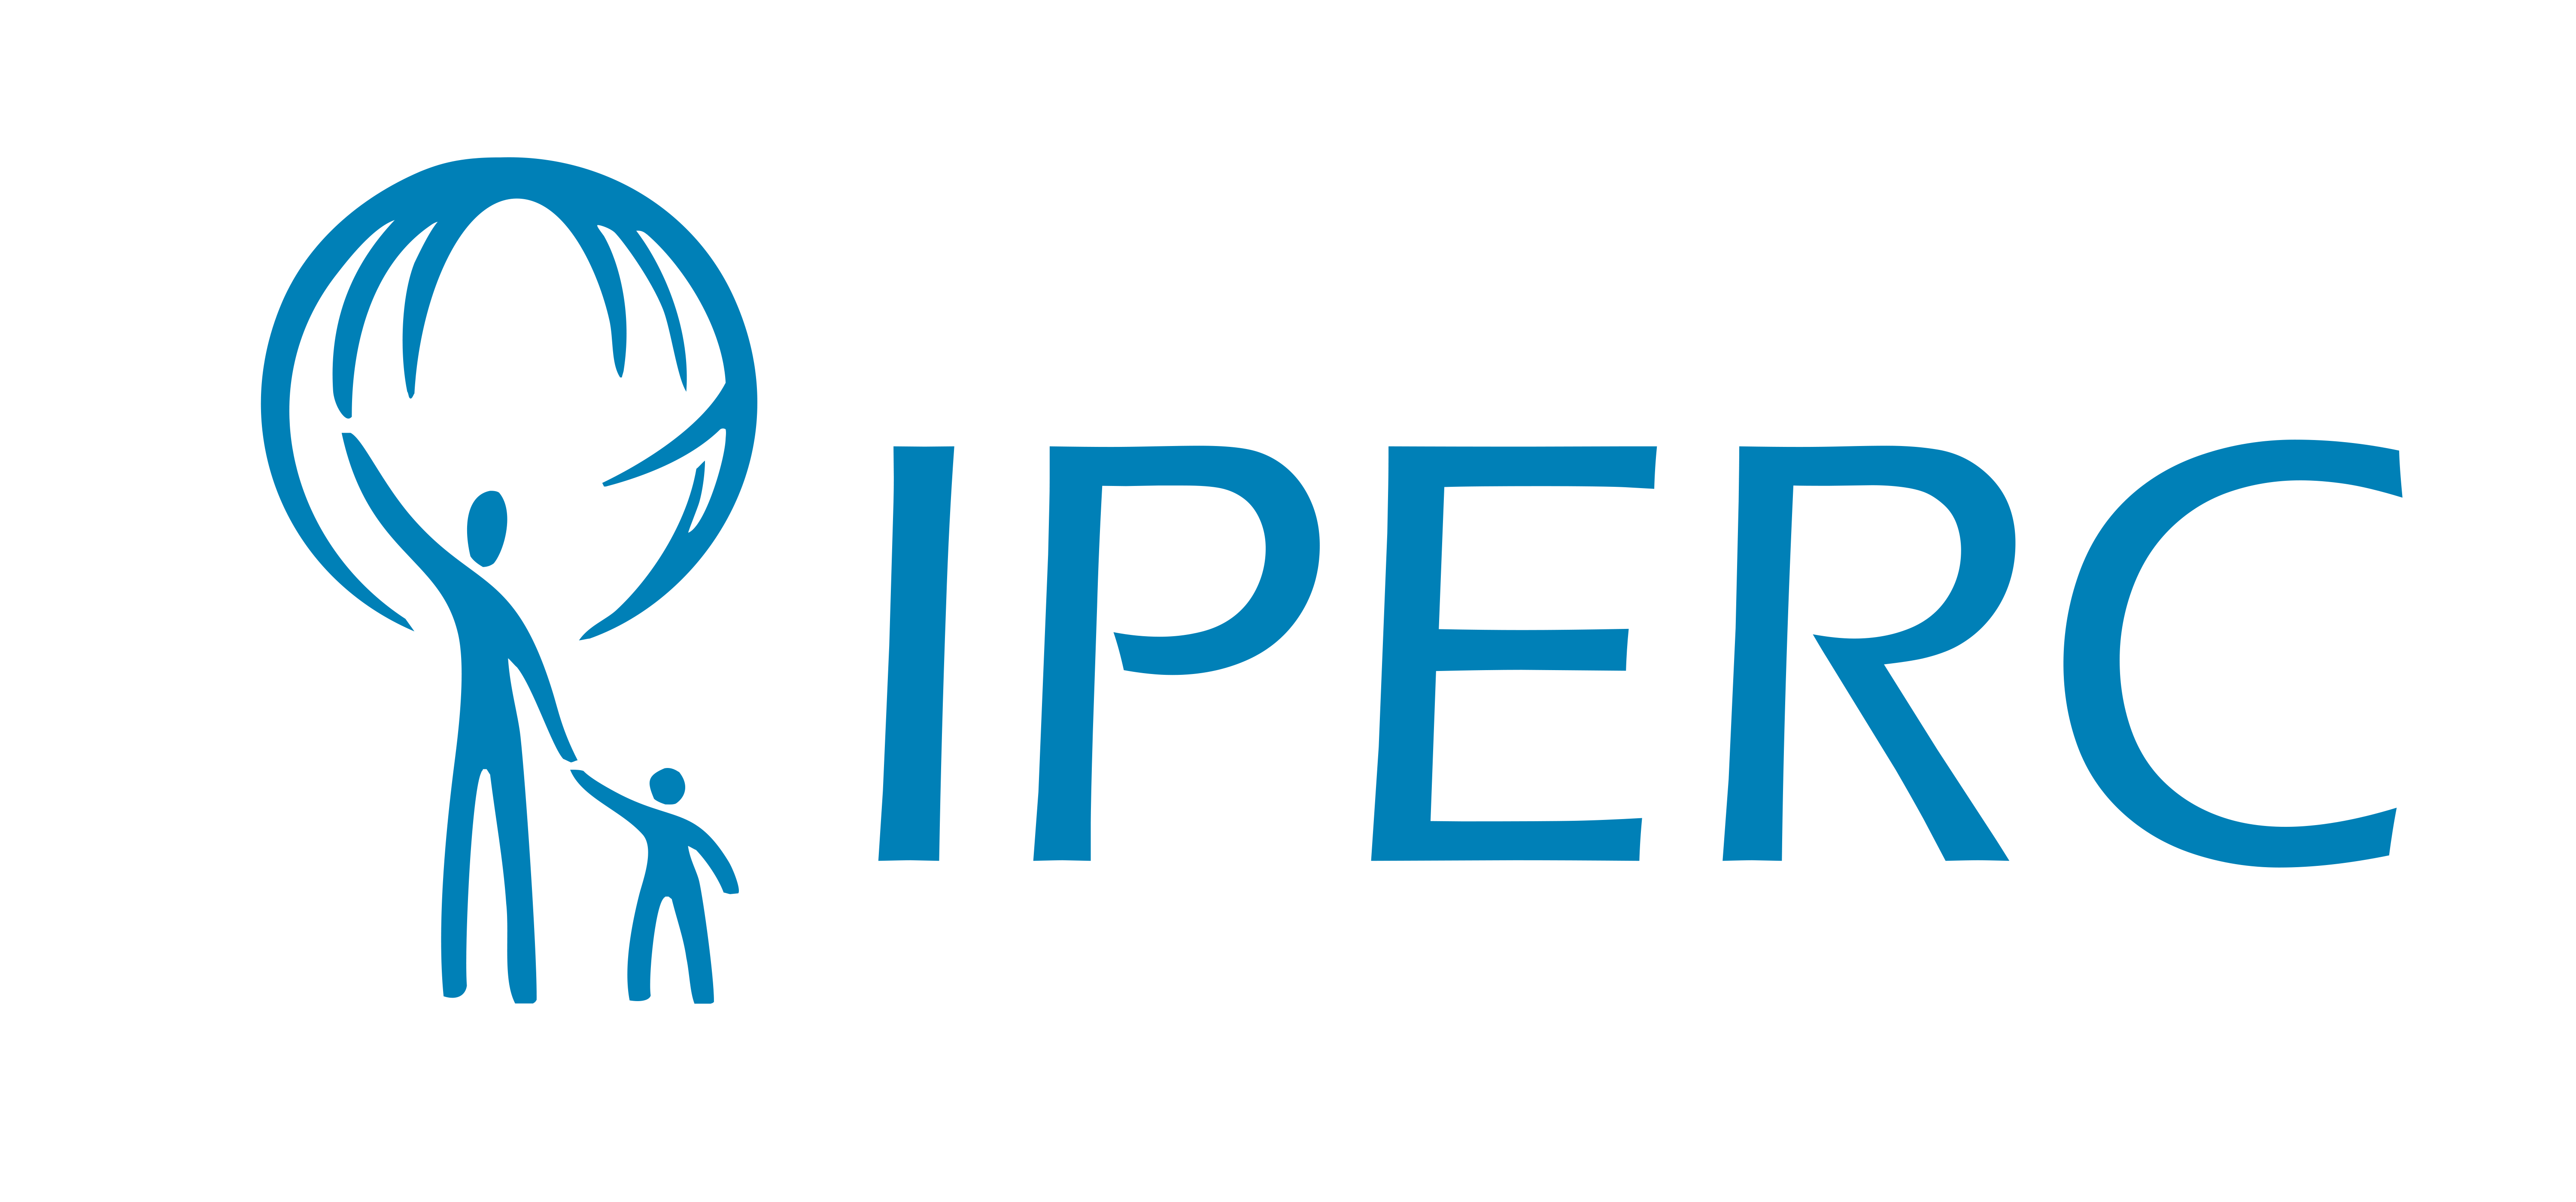 IPERC Academy